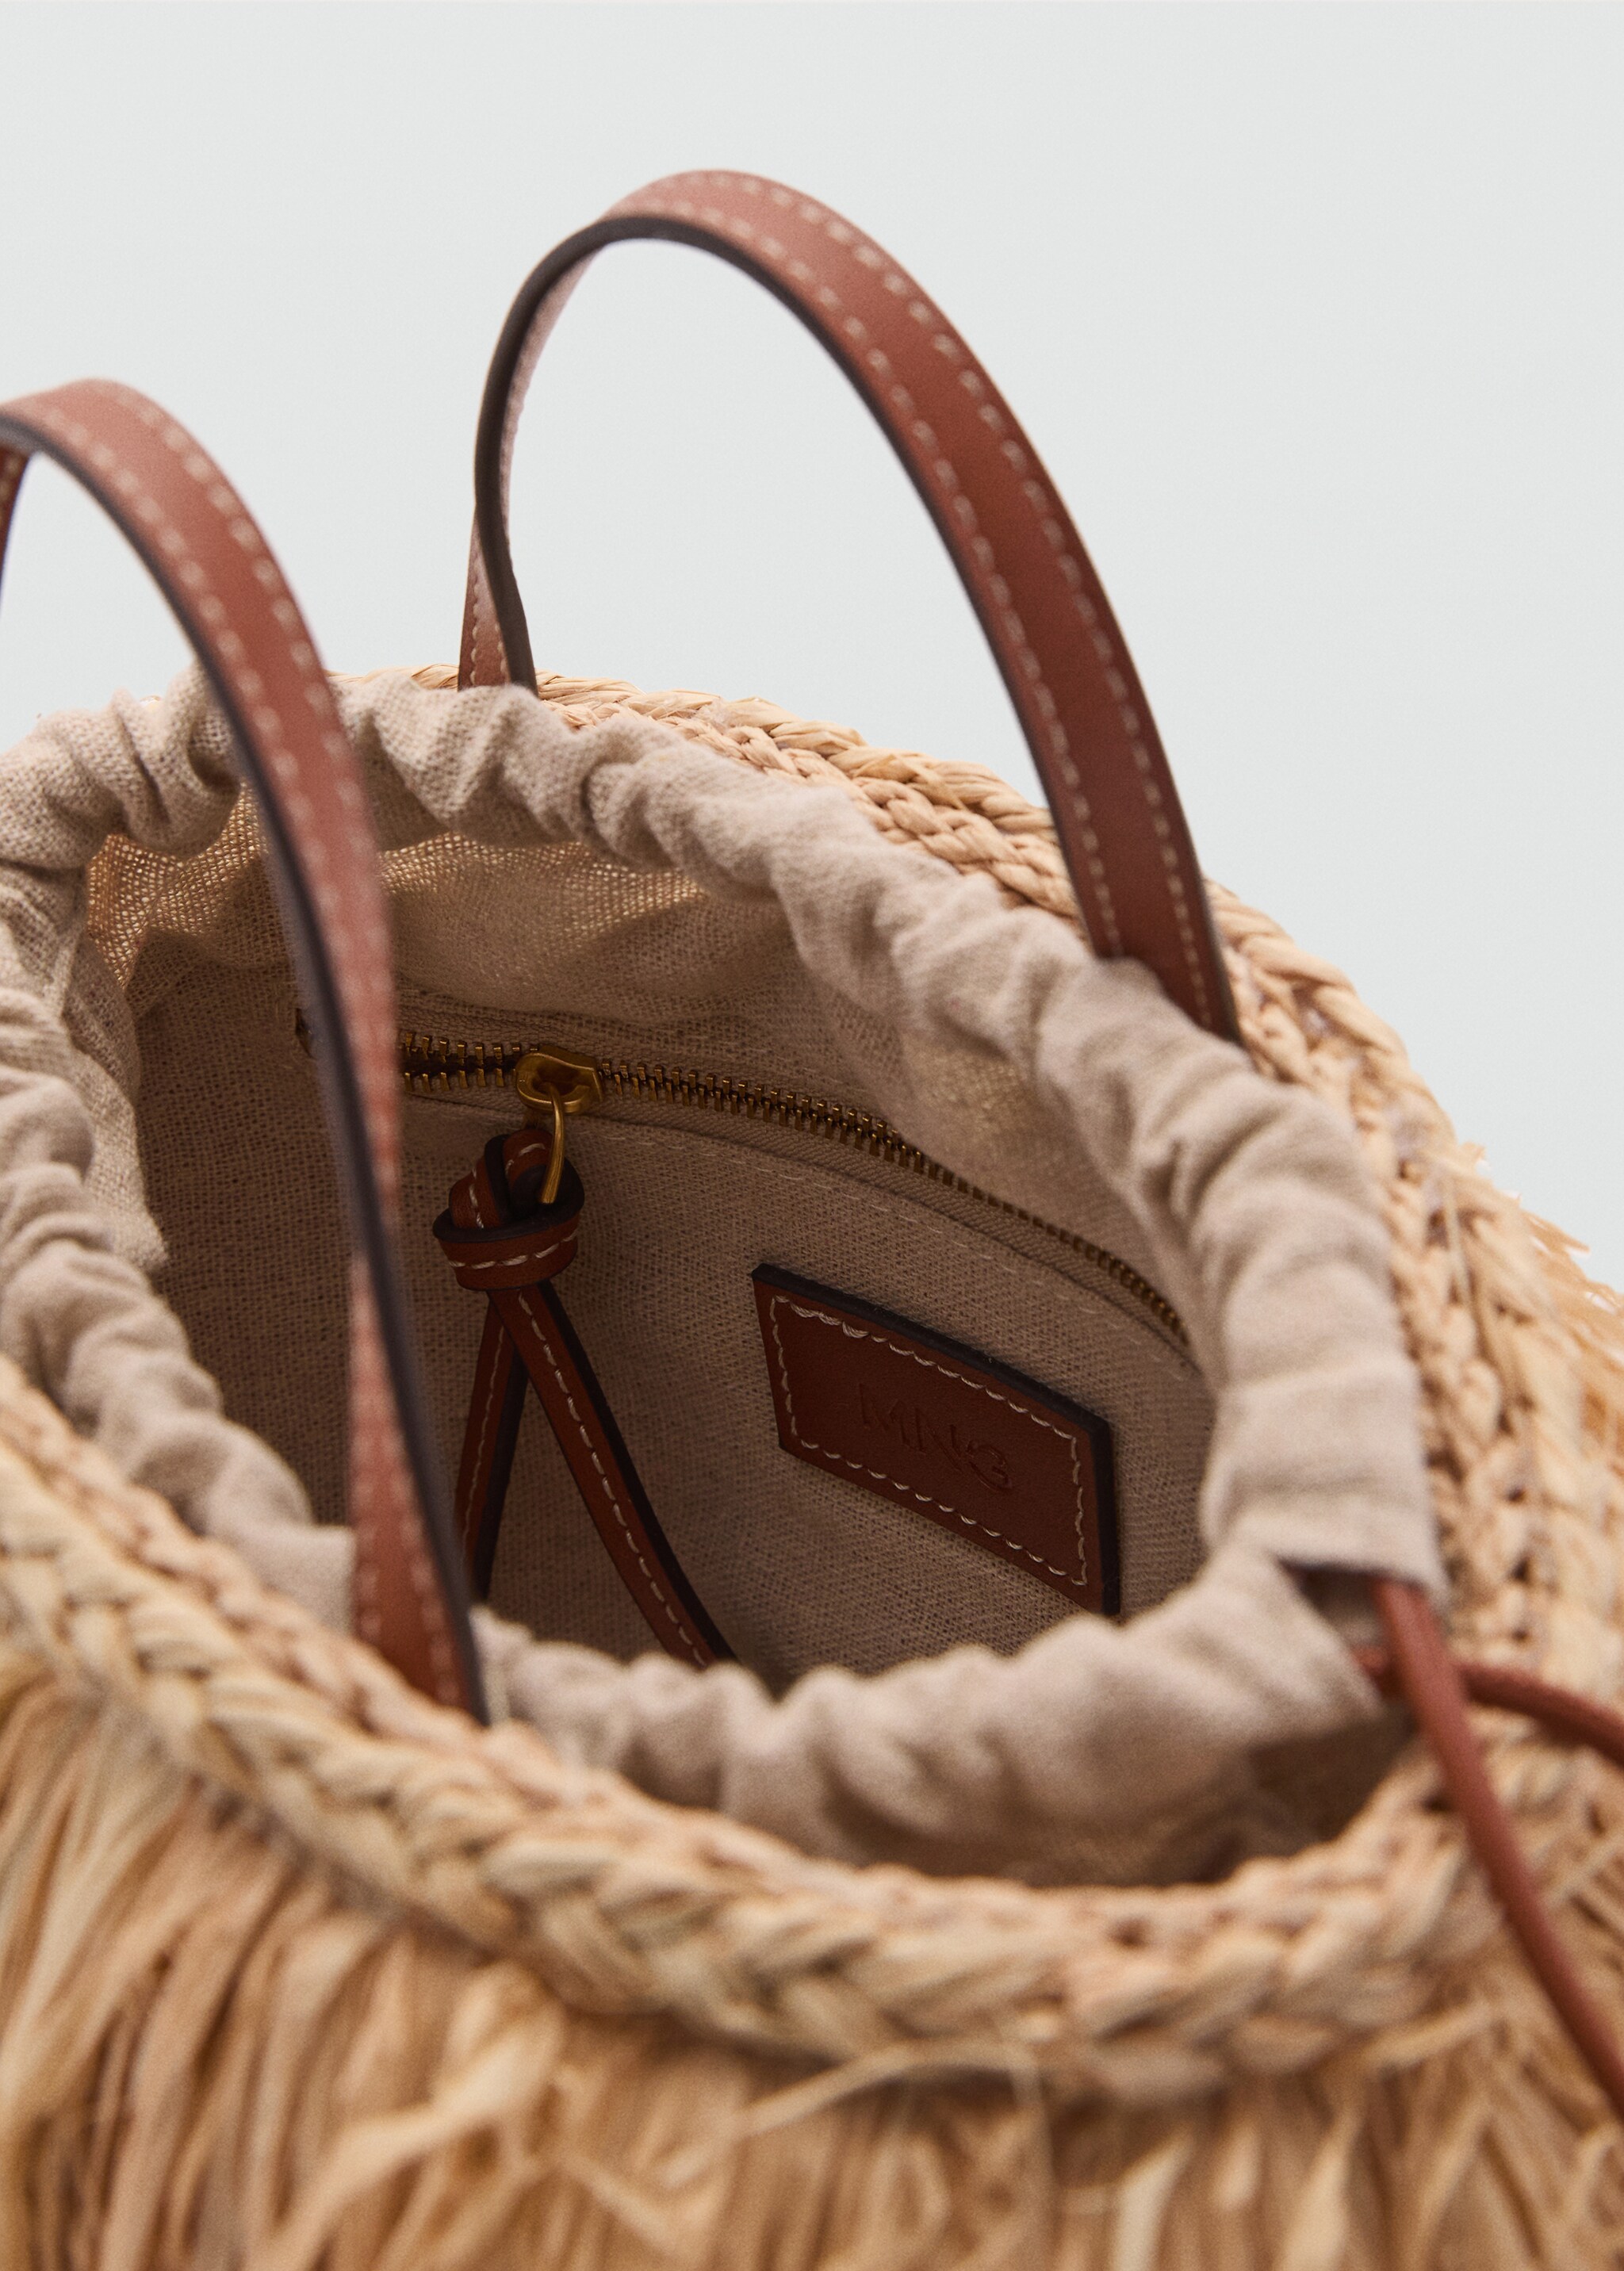 Fringed handbag - Details of the article 2